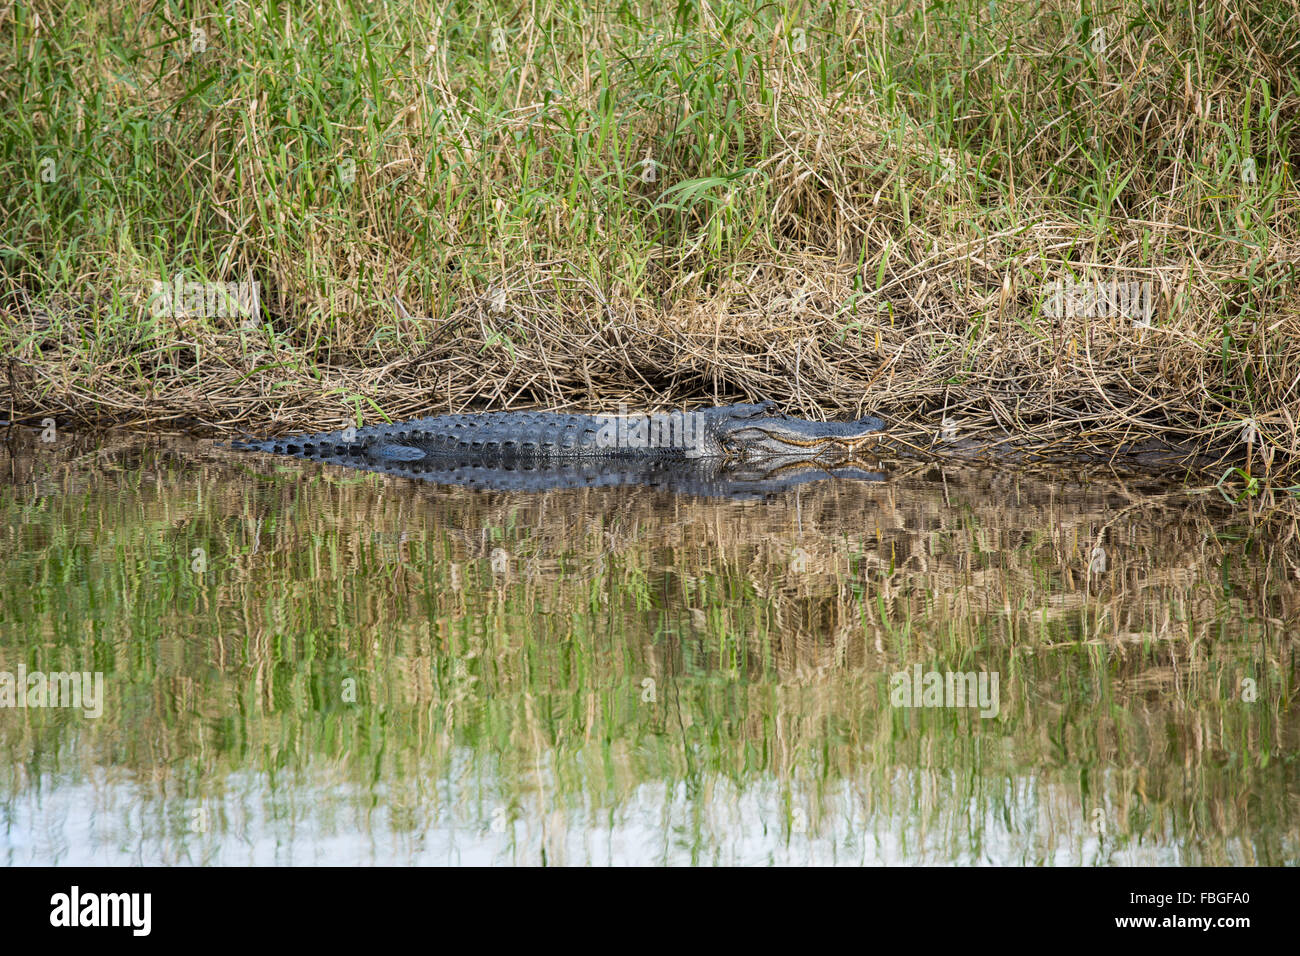 American alligator sunning itself on a river bank. Stock Photo